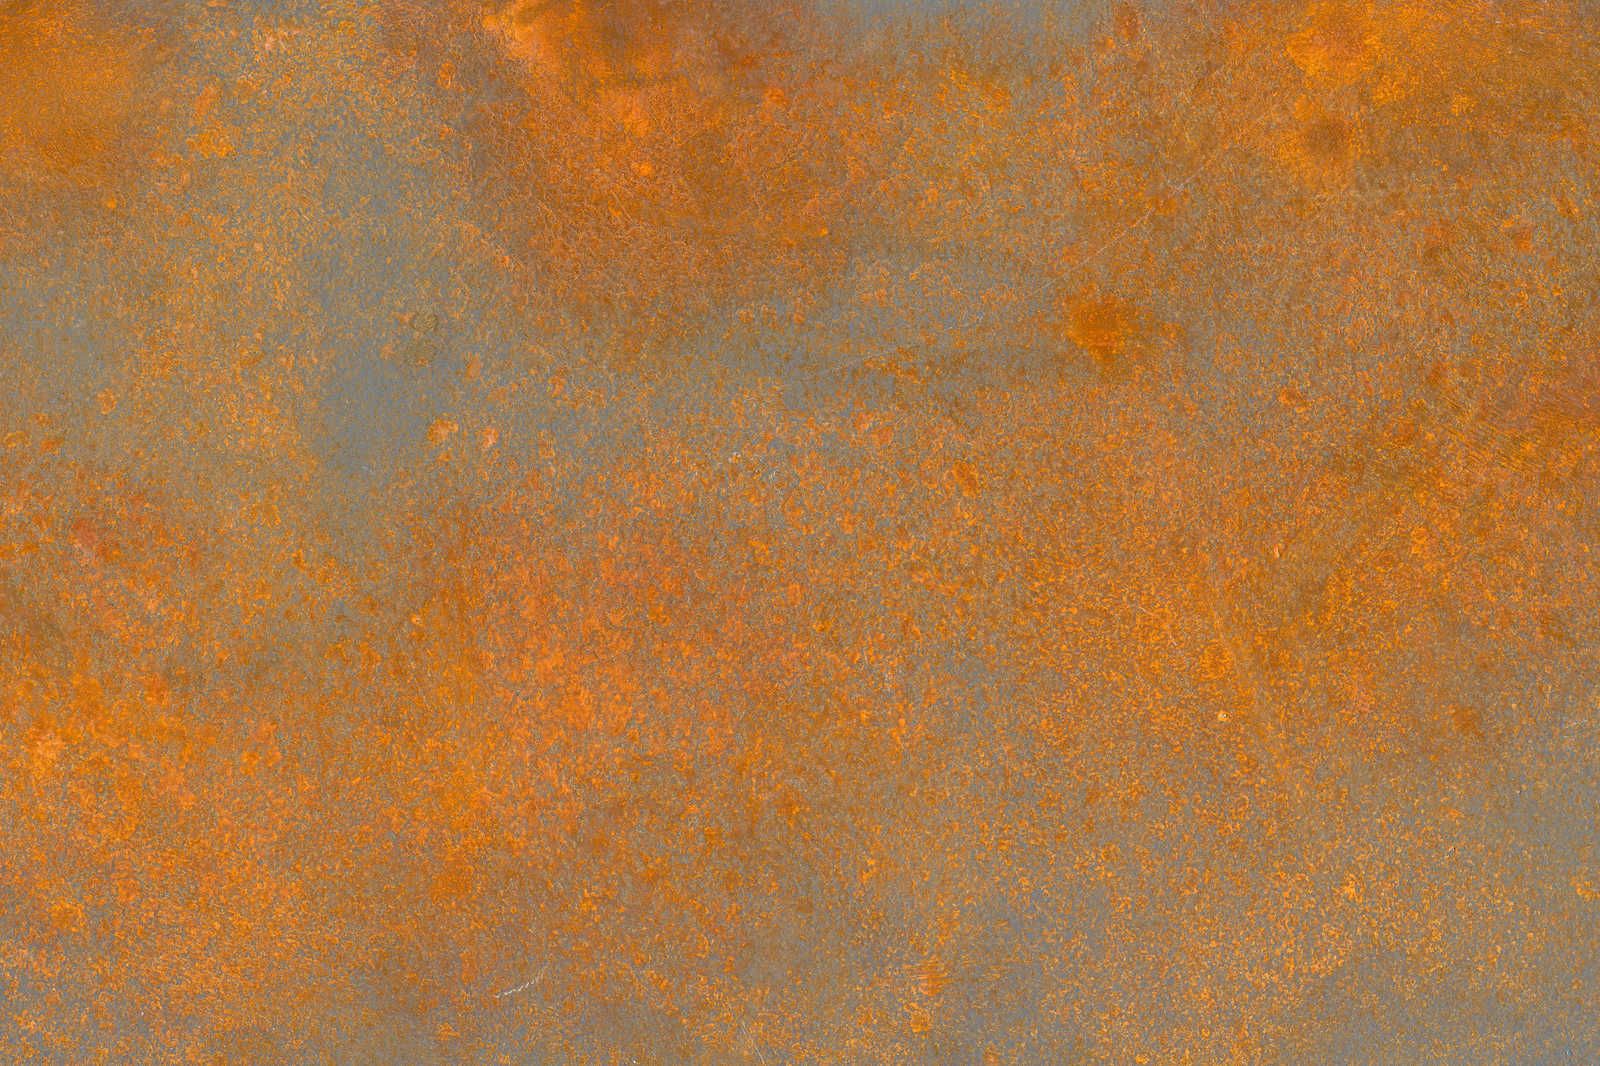             Rust Optics Canvas Schilderij Oranjebruin met used look - 0,90 m x 0,60 m
        